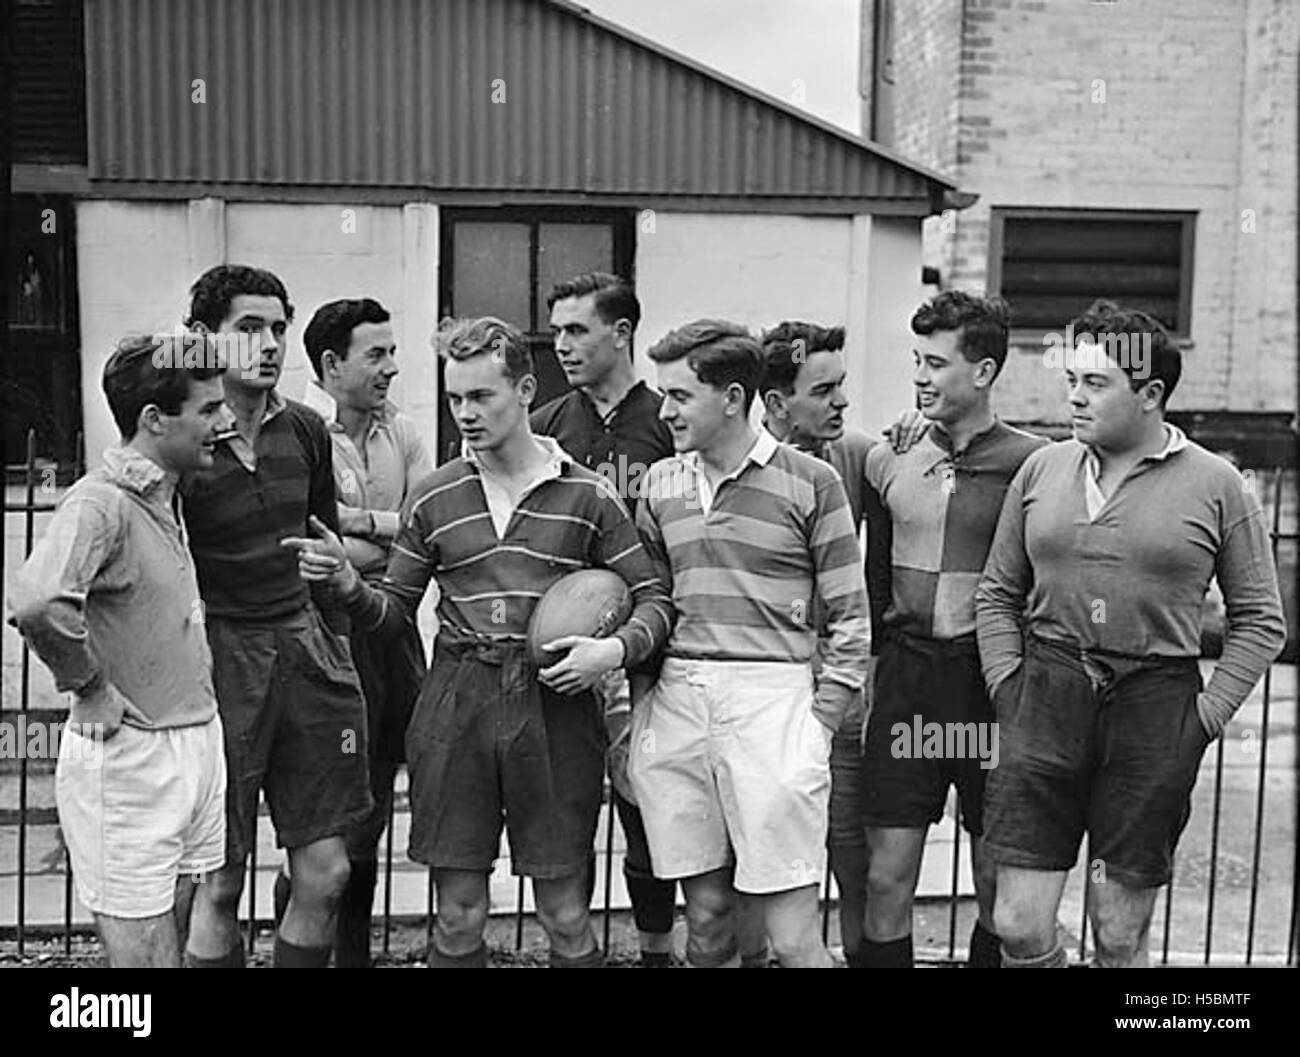 Llandrindod School rugby team against old boys Stock Photo